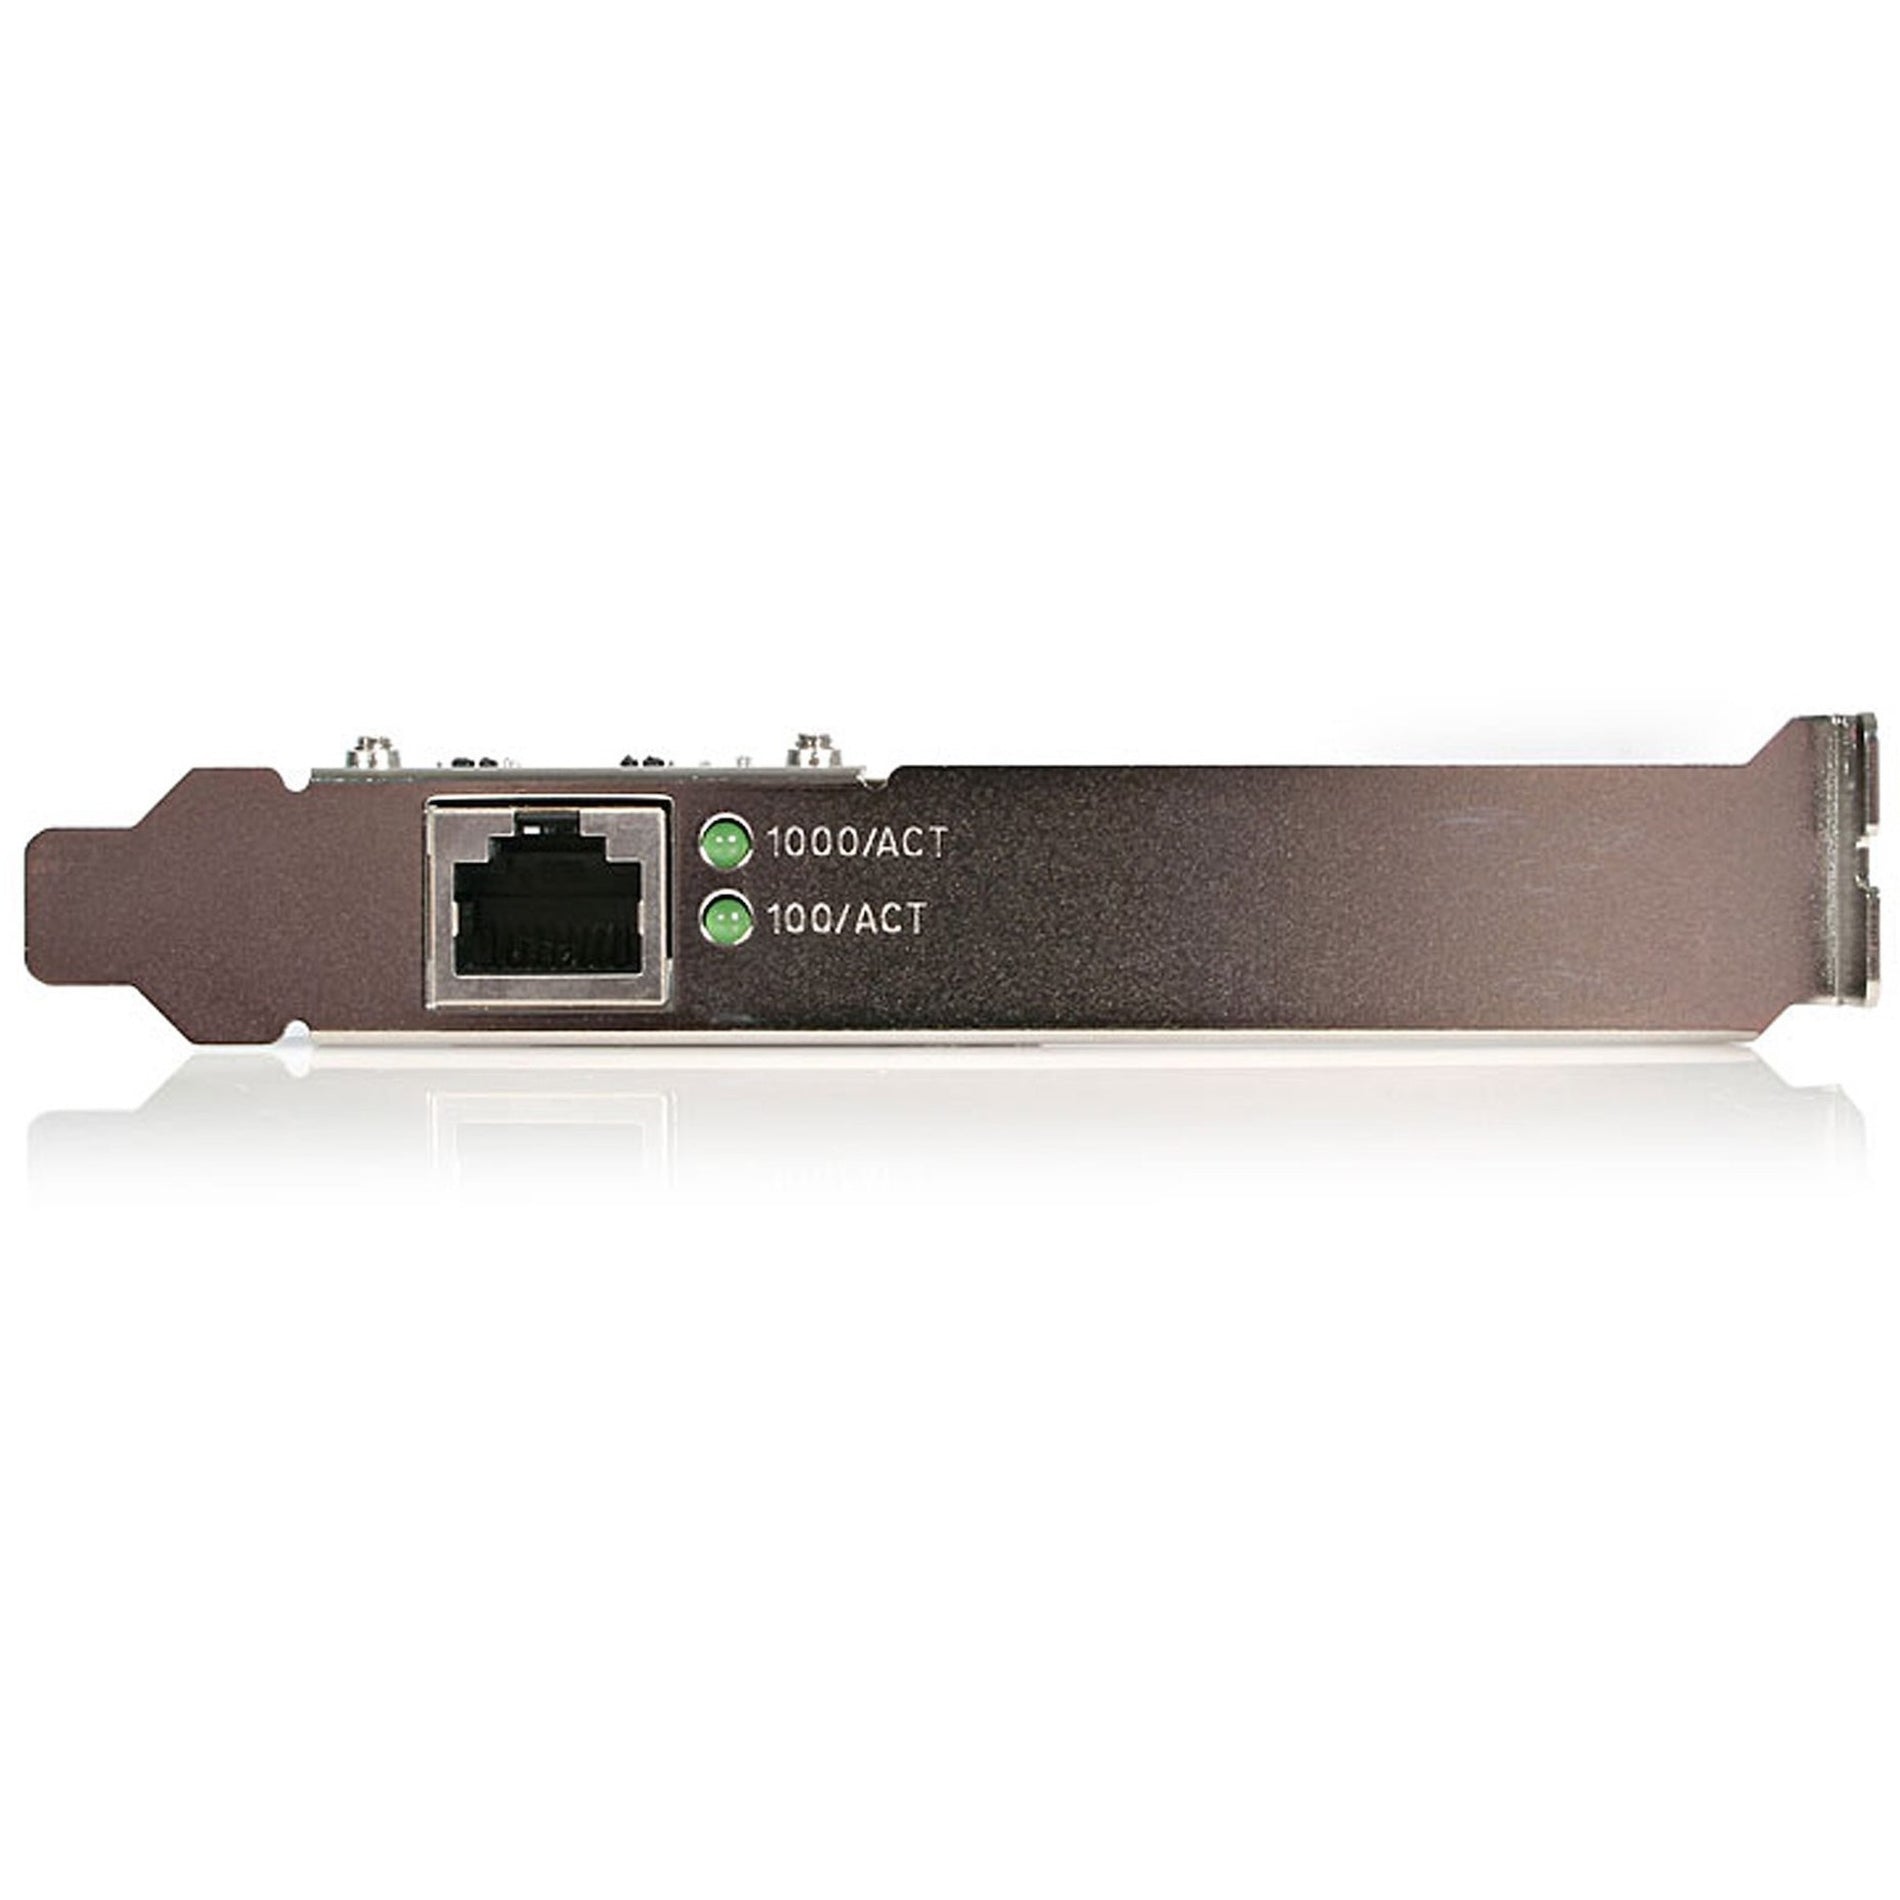 StarTech.com ST1000BT32 1 Port PCI 10/100/1000 32 Bit Gigabit Ethernet Network Adapter Card, Lifetime Warranty, Plug-in Card